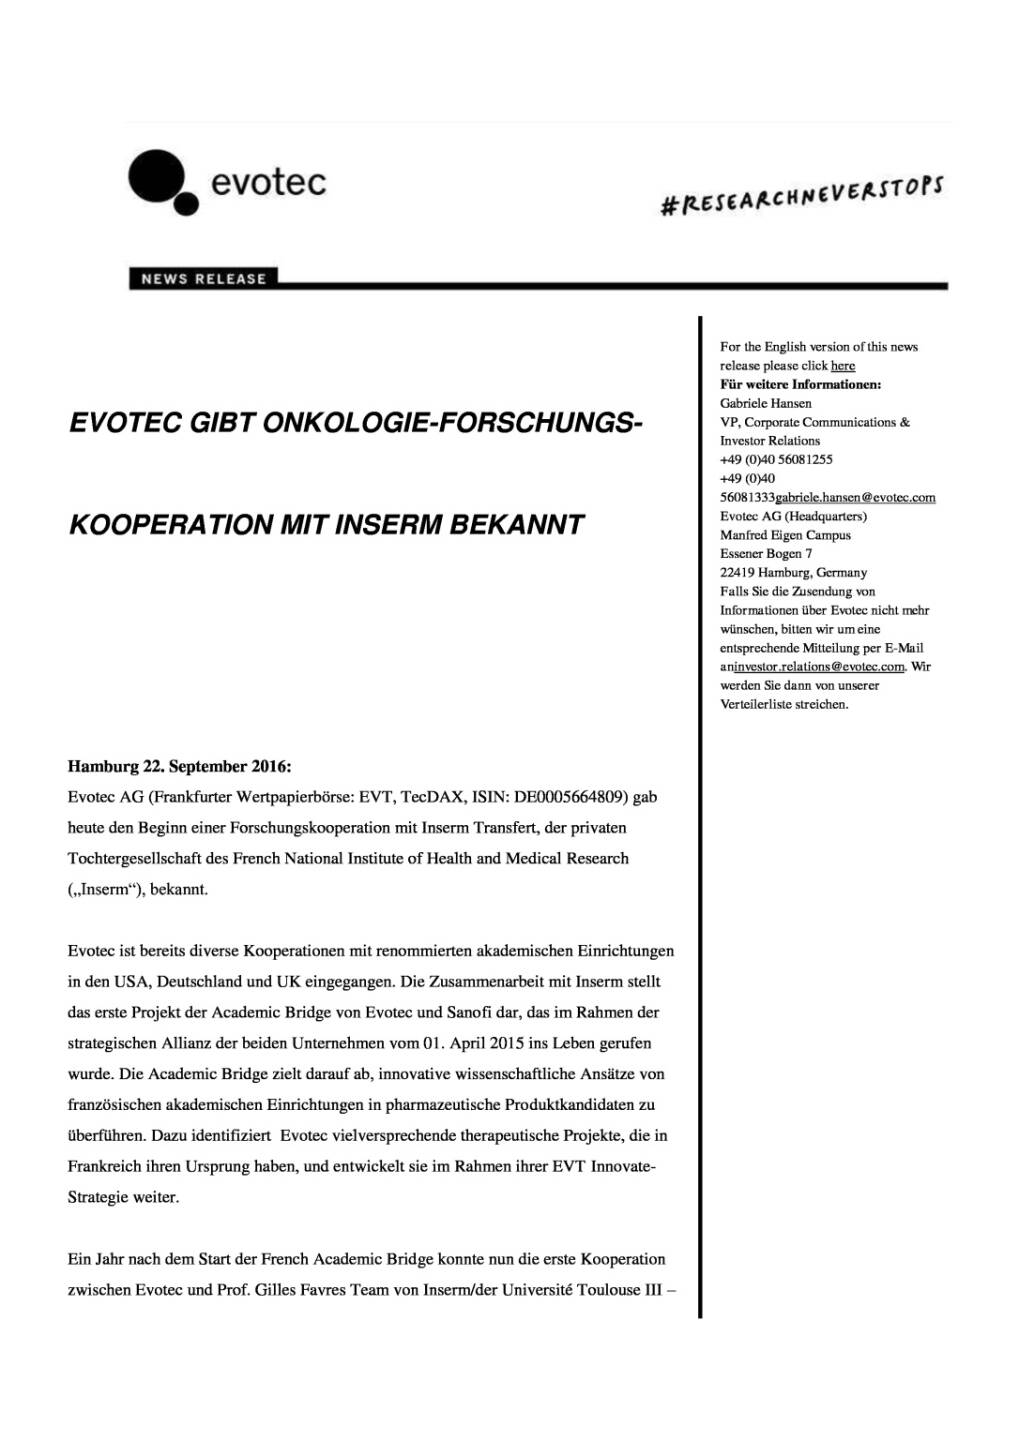 Evotec: Onkologie-Forschungs-Kooperation mit Inserm, Seite 1/3, komplettes Dokument unter http://boerse-social.com/static/uploads/file_1815_evotec_onkologie-forschungs-kooperation_mit_inserm.pdf